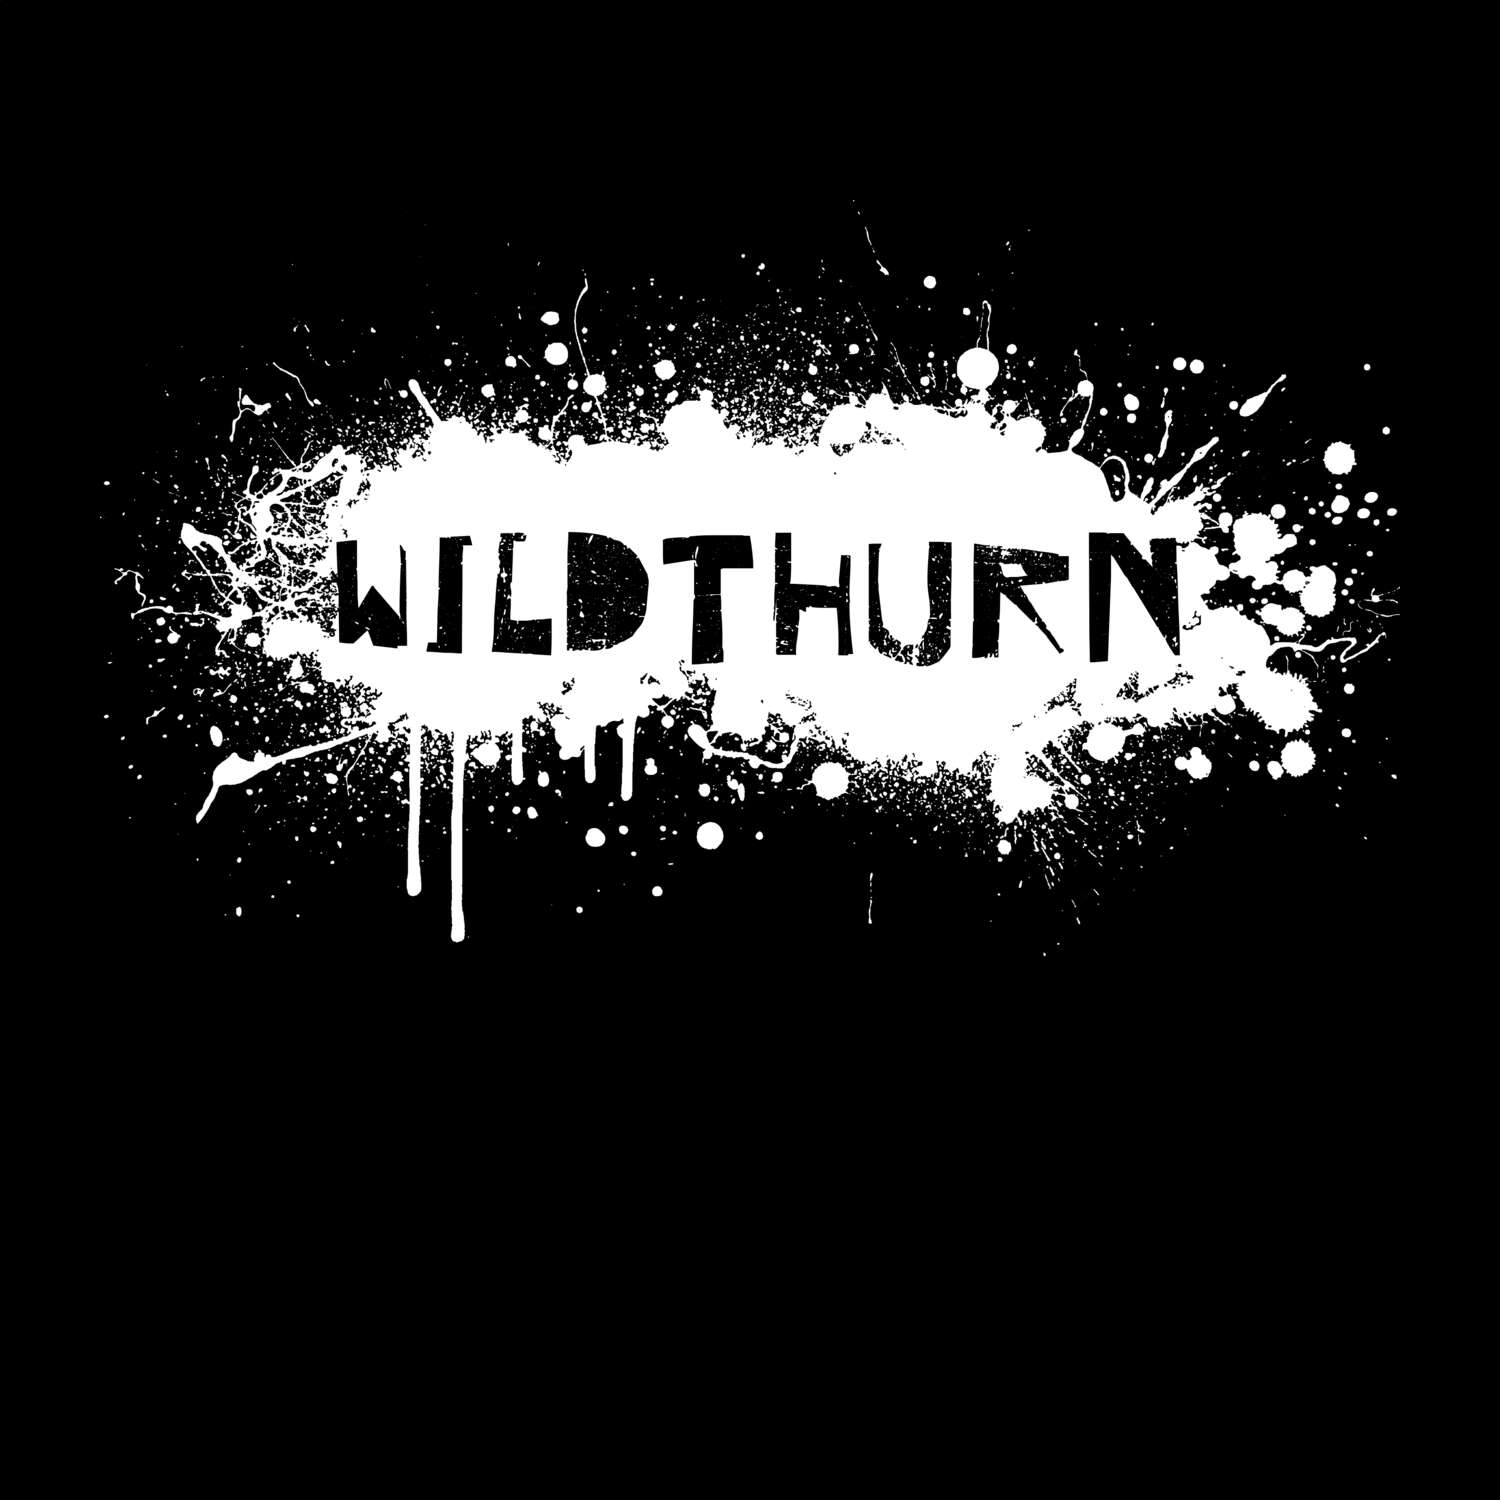 Wildthurn T-Shirt »Paint Splash Punk«